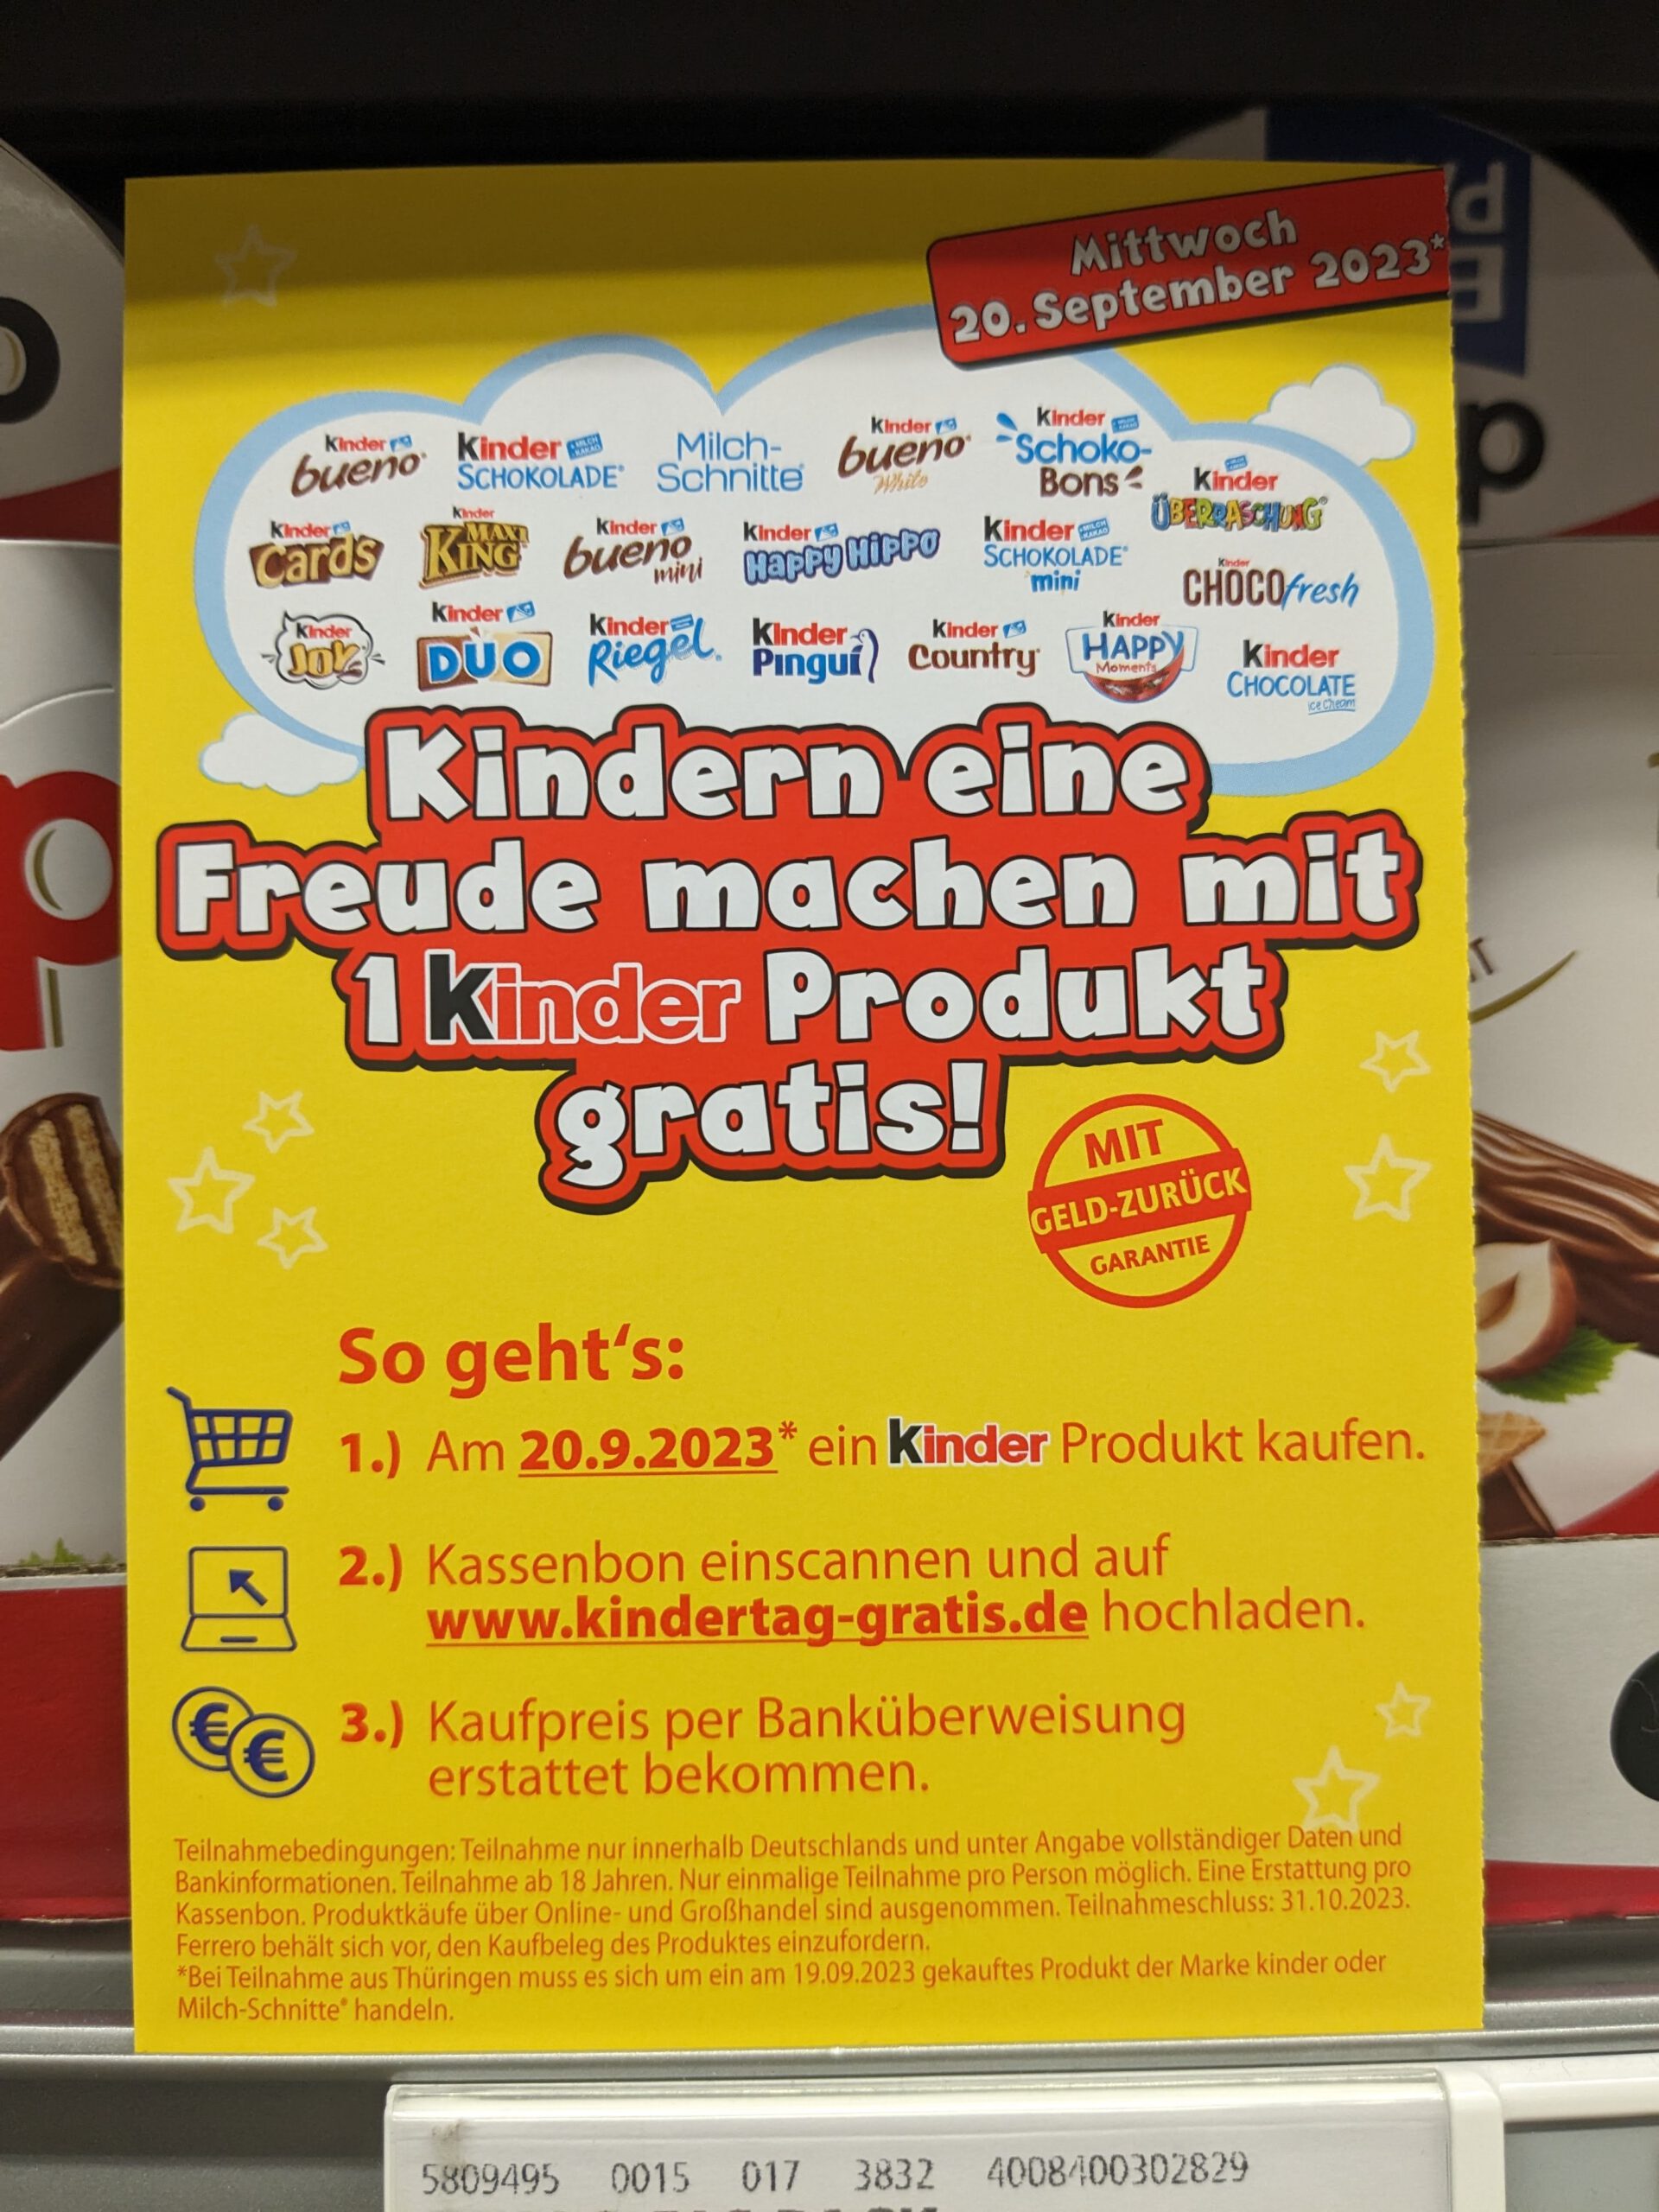 Ferrero Kindertag Gratis Aktion 2023: 1 Kinder-Produkt kostenlos am 20.9.23 - Kassenbon hochladen